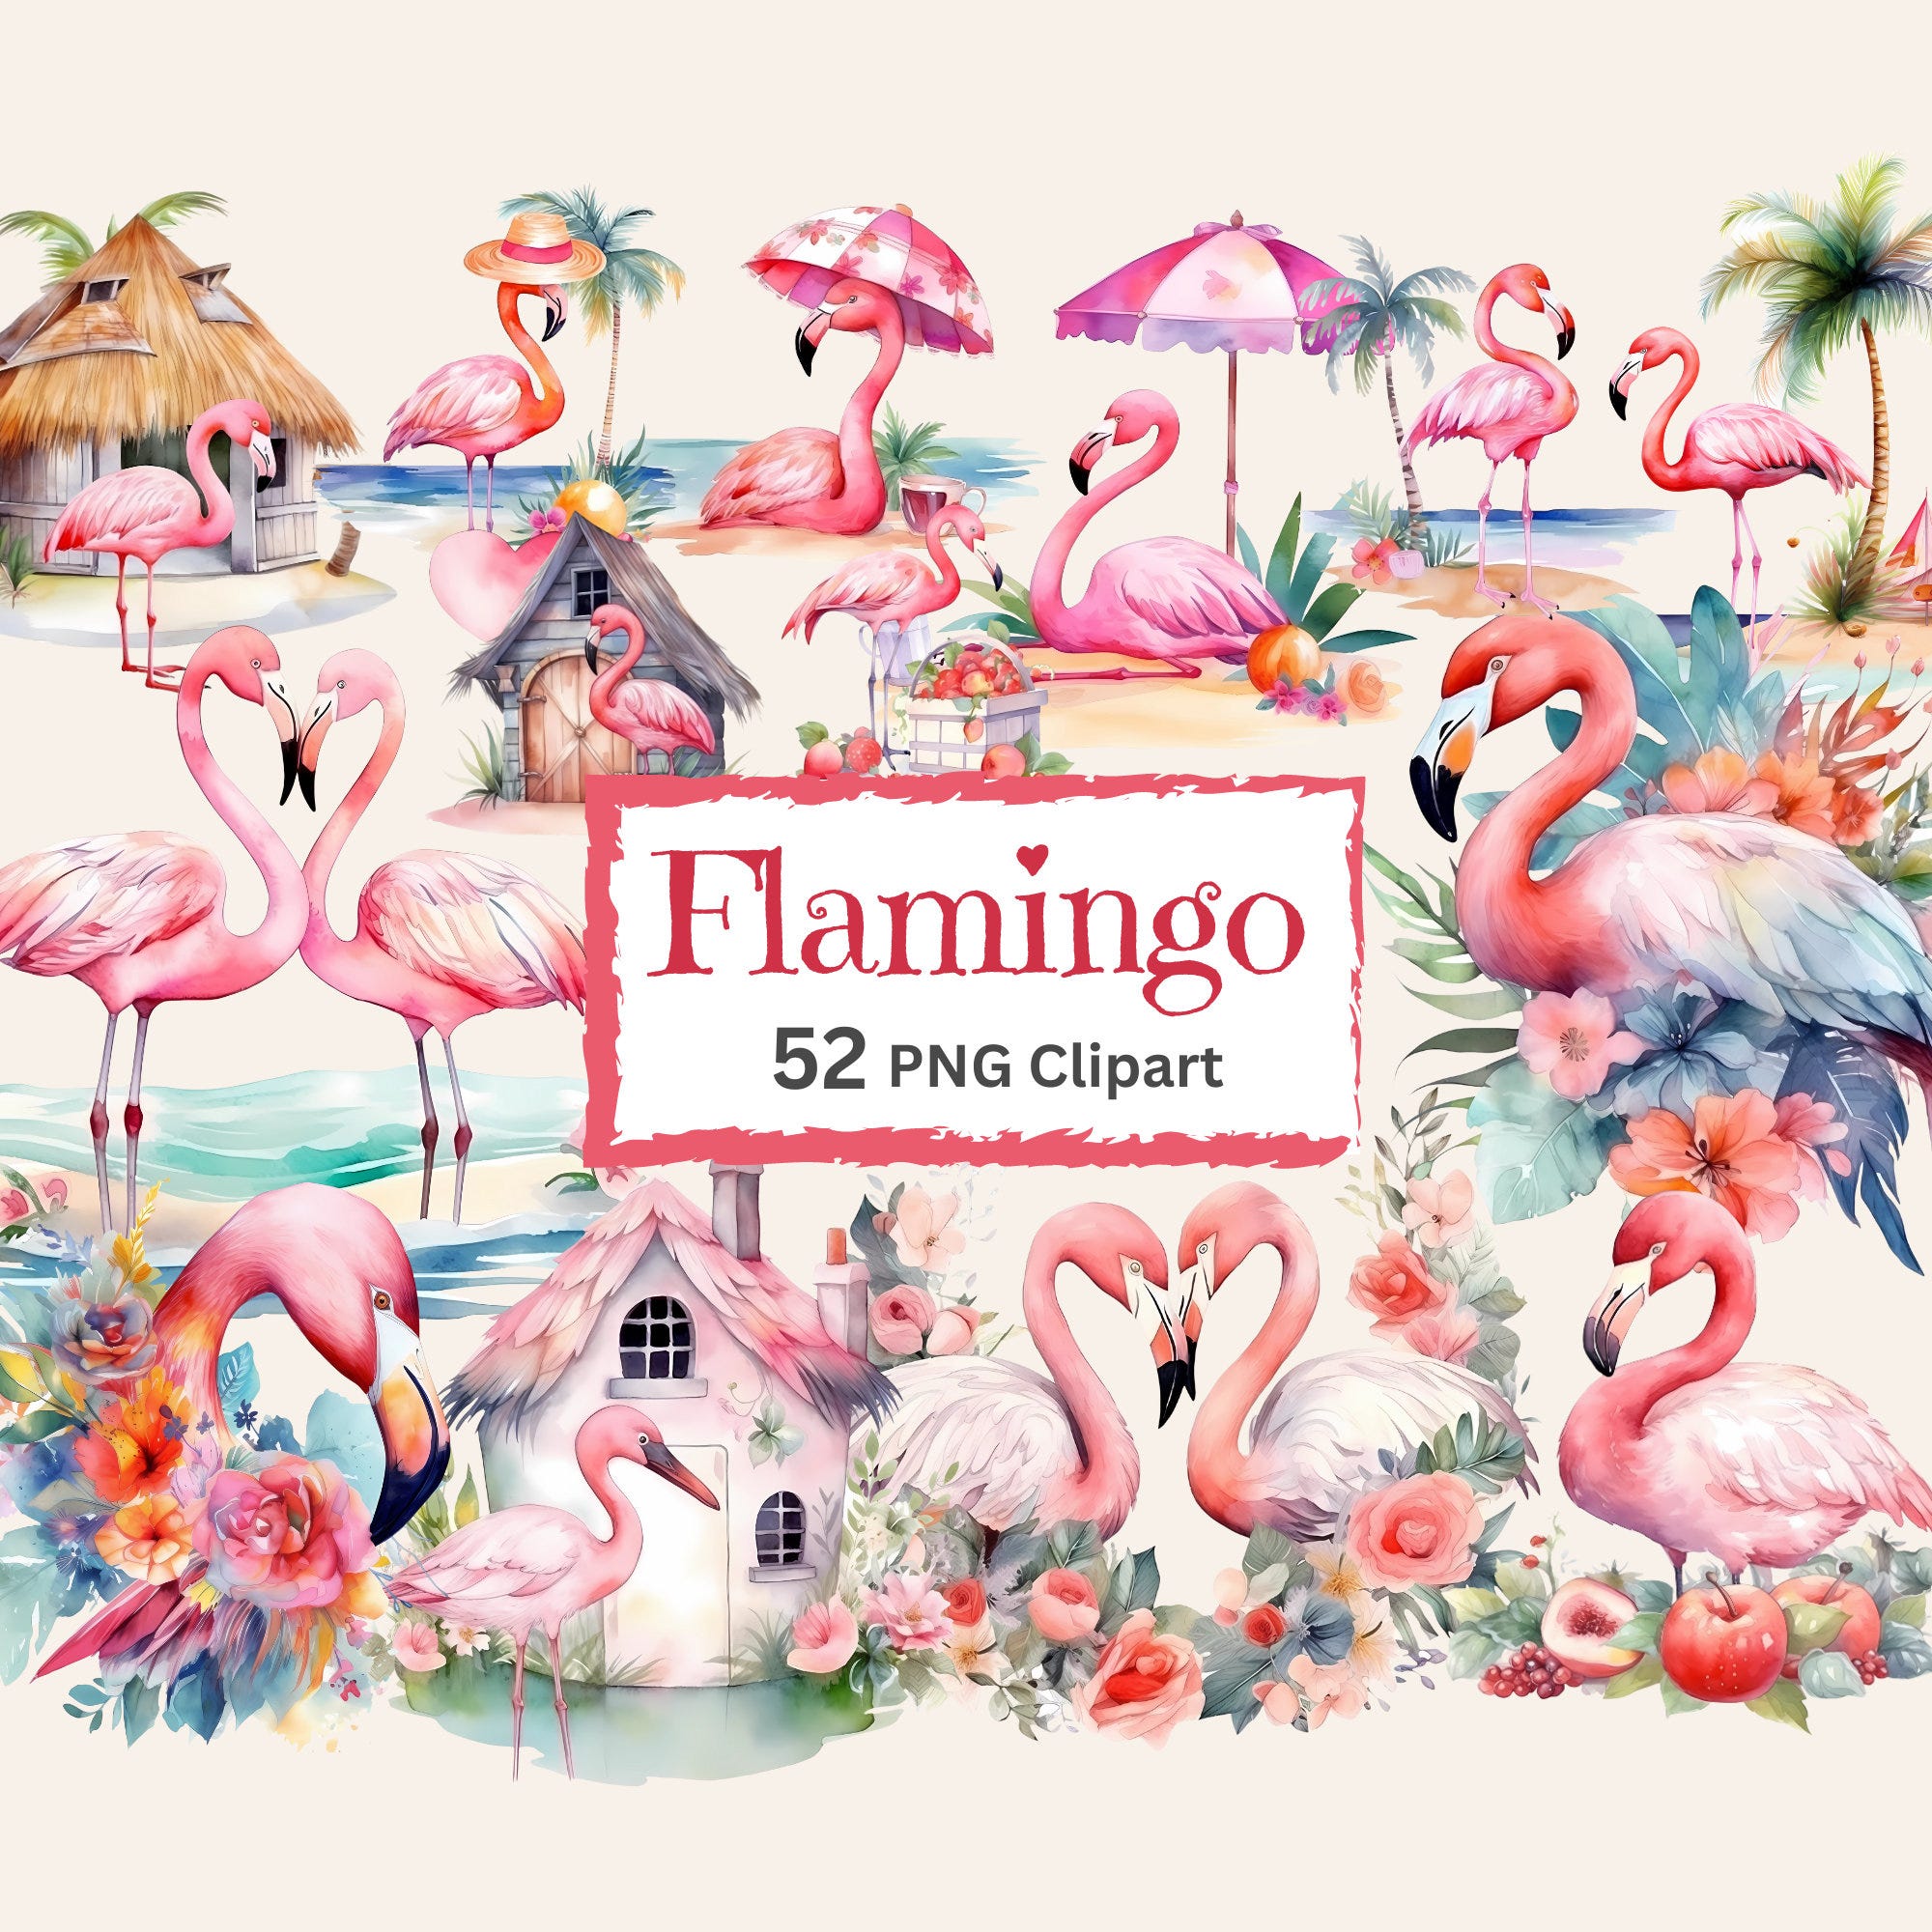 Flamingo PNG Clipart Bundle Tropical Birds with Floral Fruits Watercolor Illustration Junk Journal Crafting Paper Scrapbook Instant Download